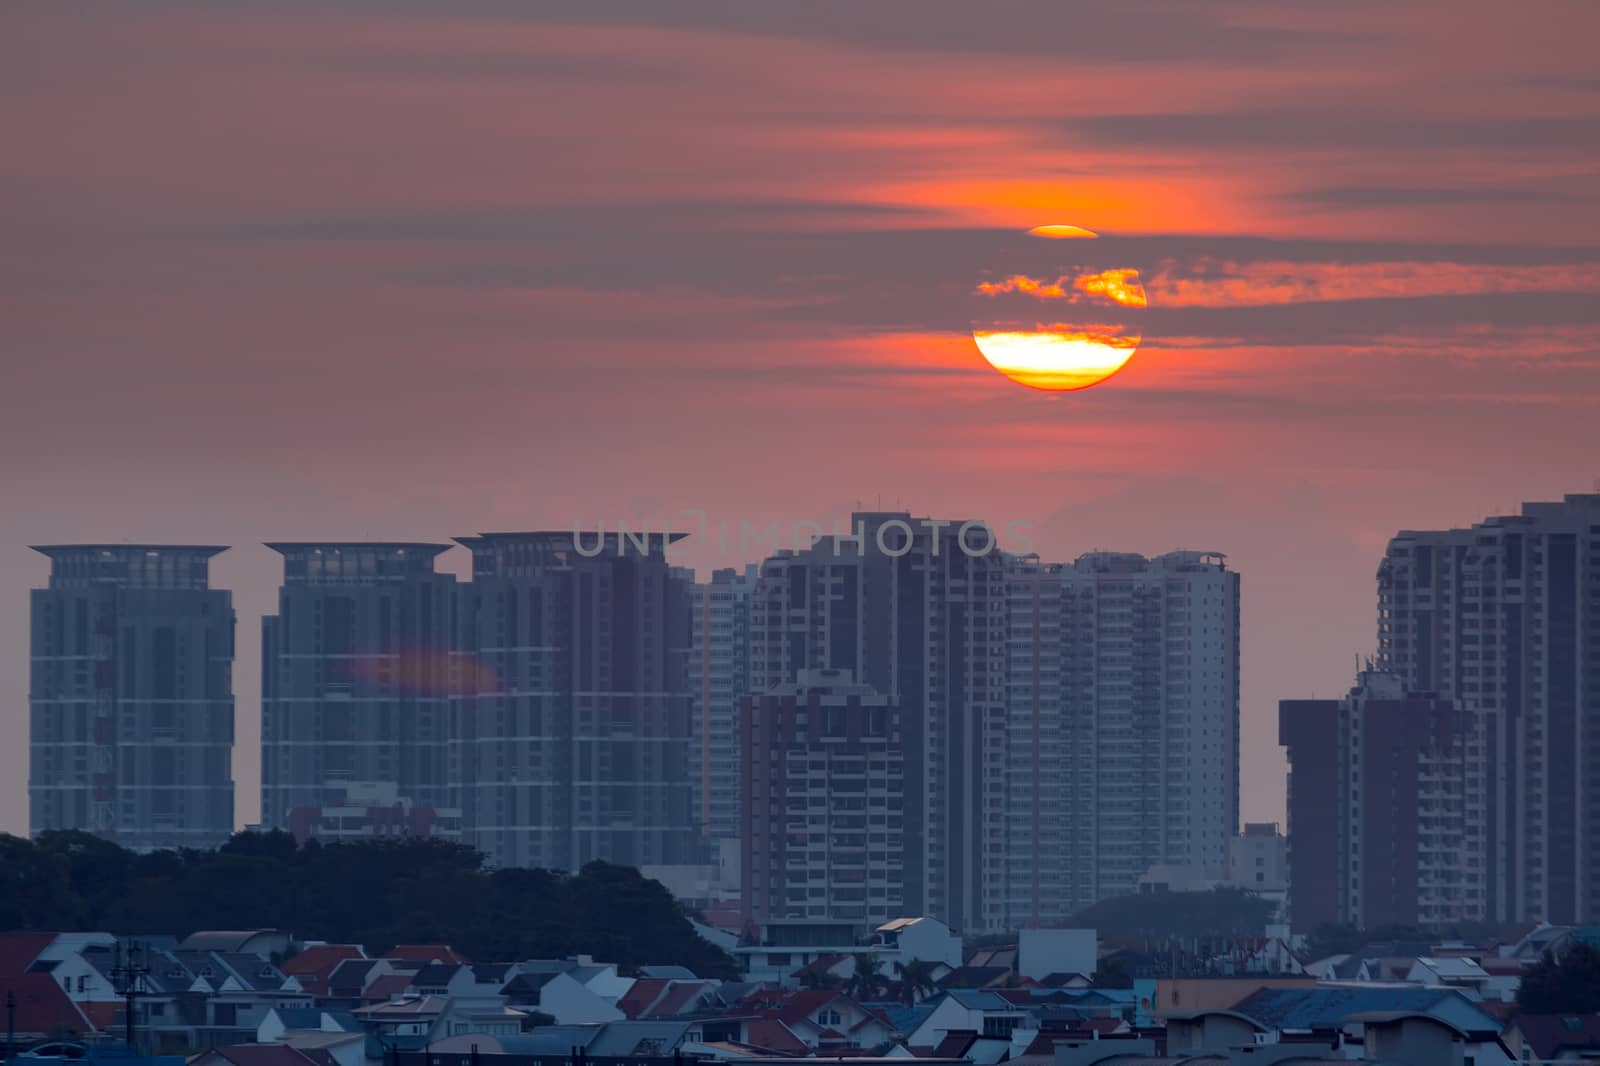 Sunrise over Singapore Residential Neighborhood by Davidgn